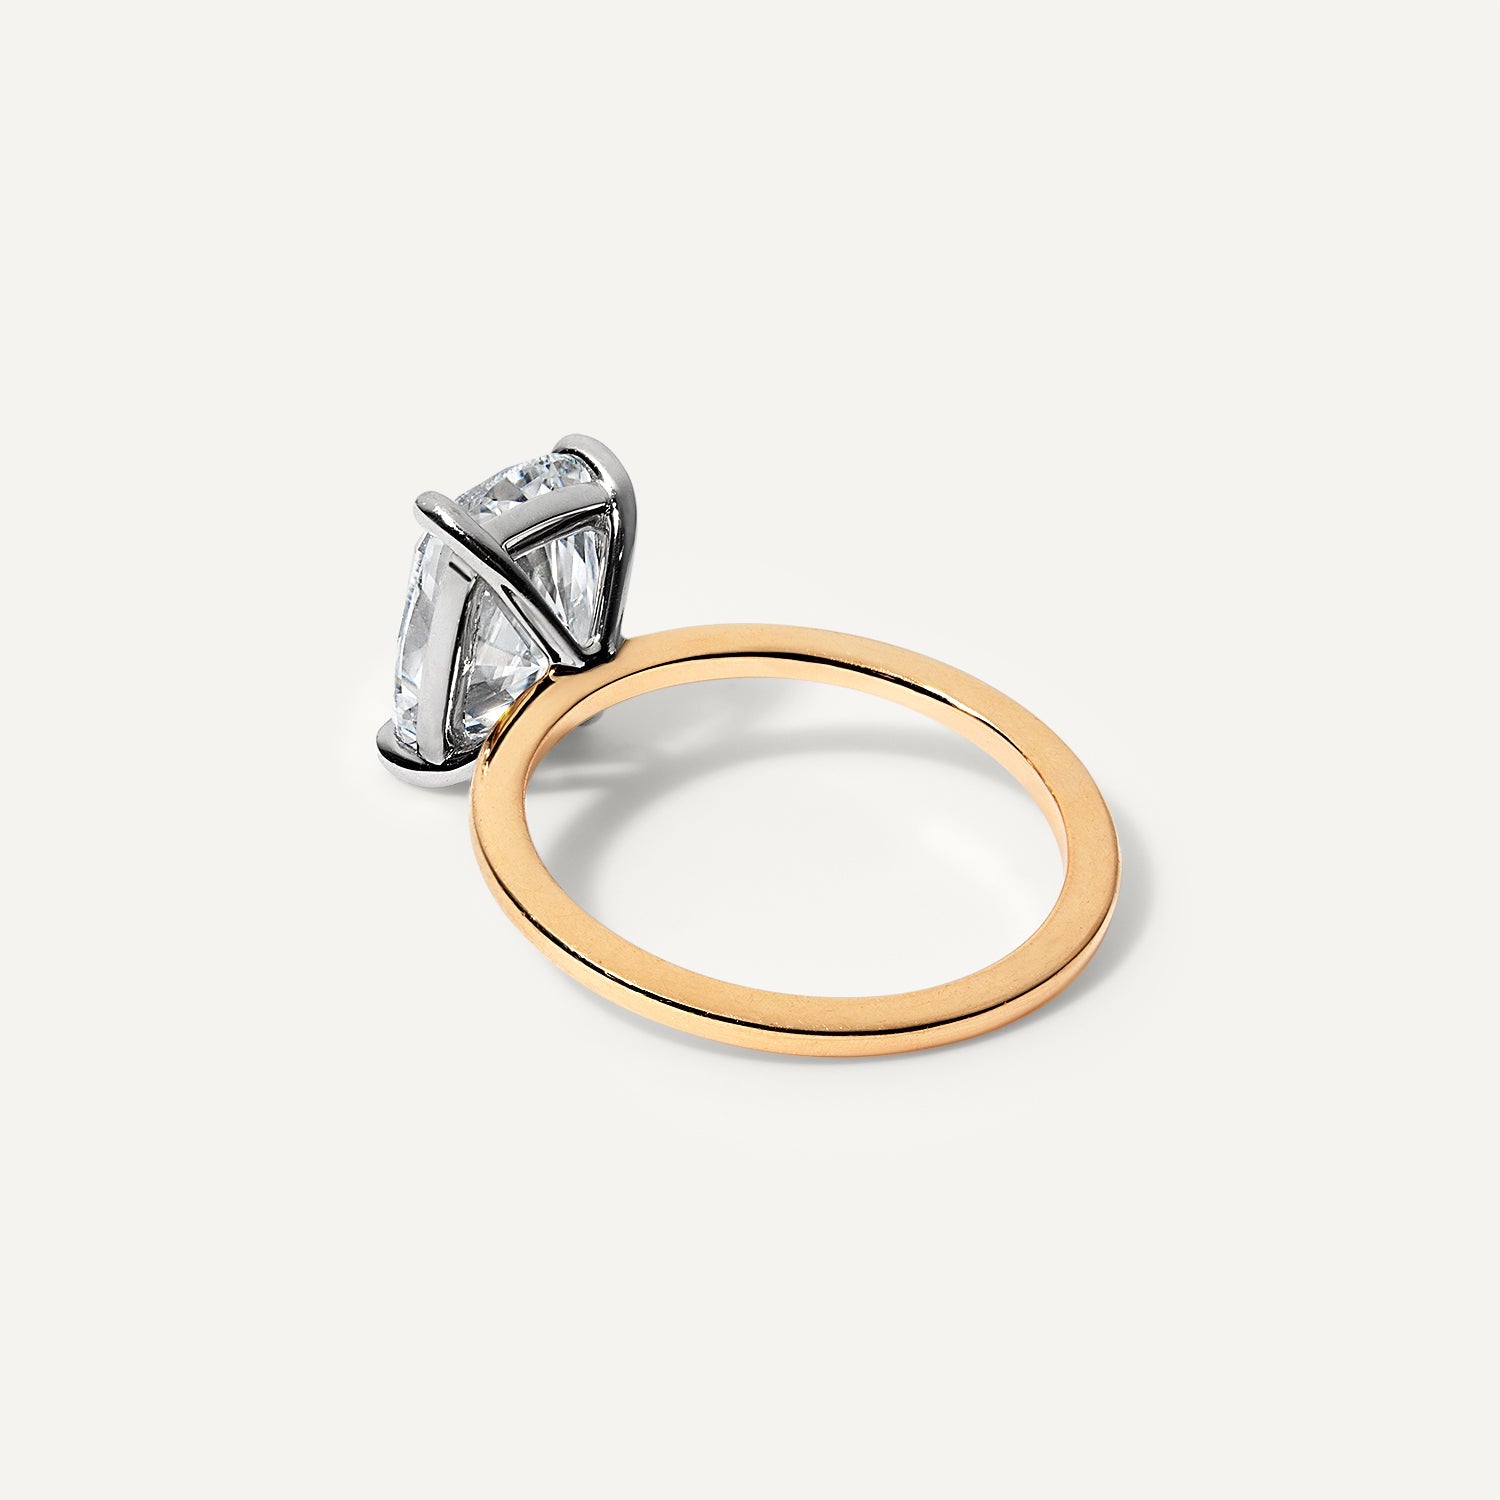 Cushion lab diamond engagement ring side profile.